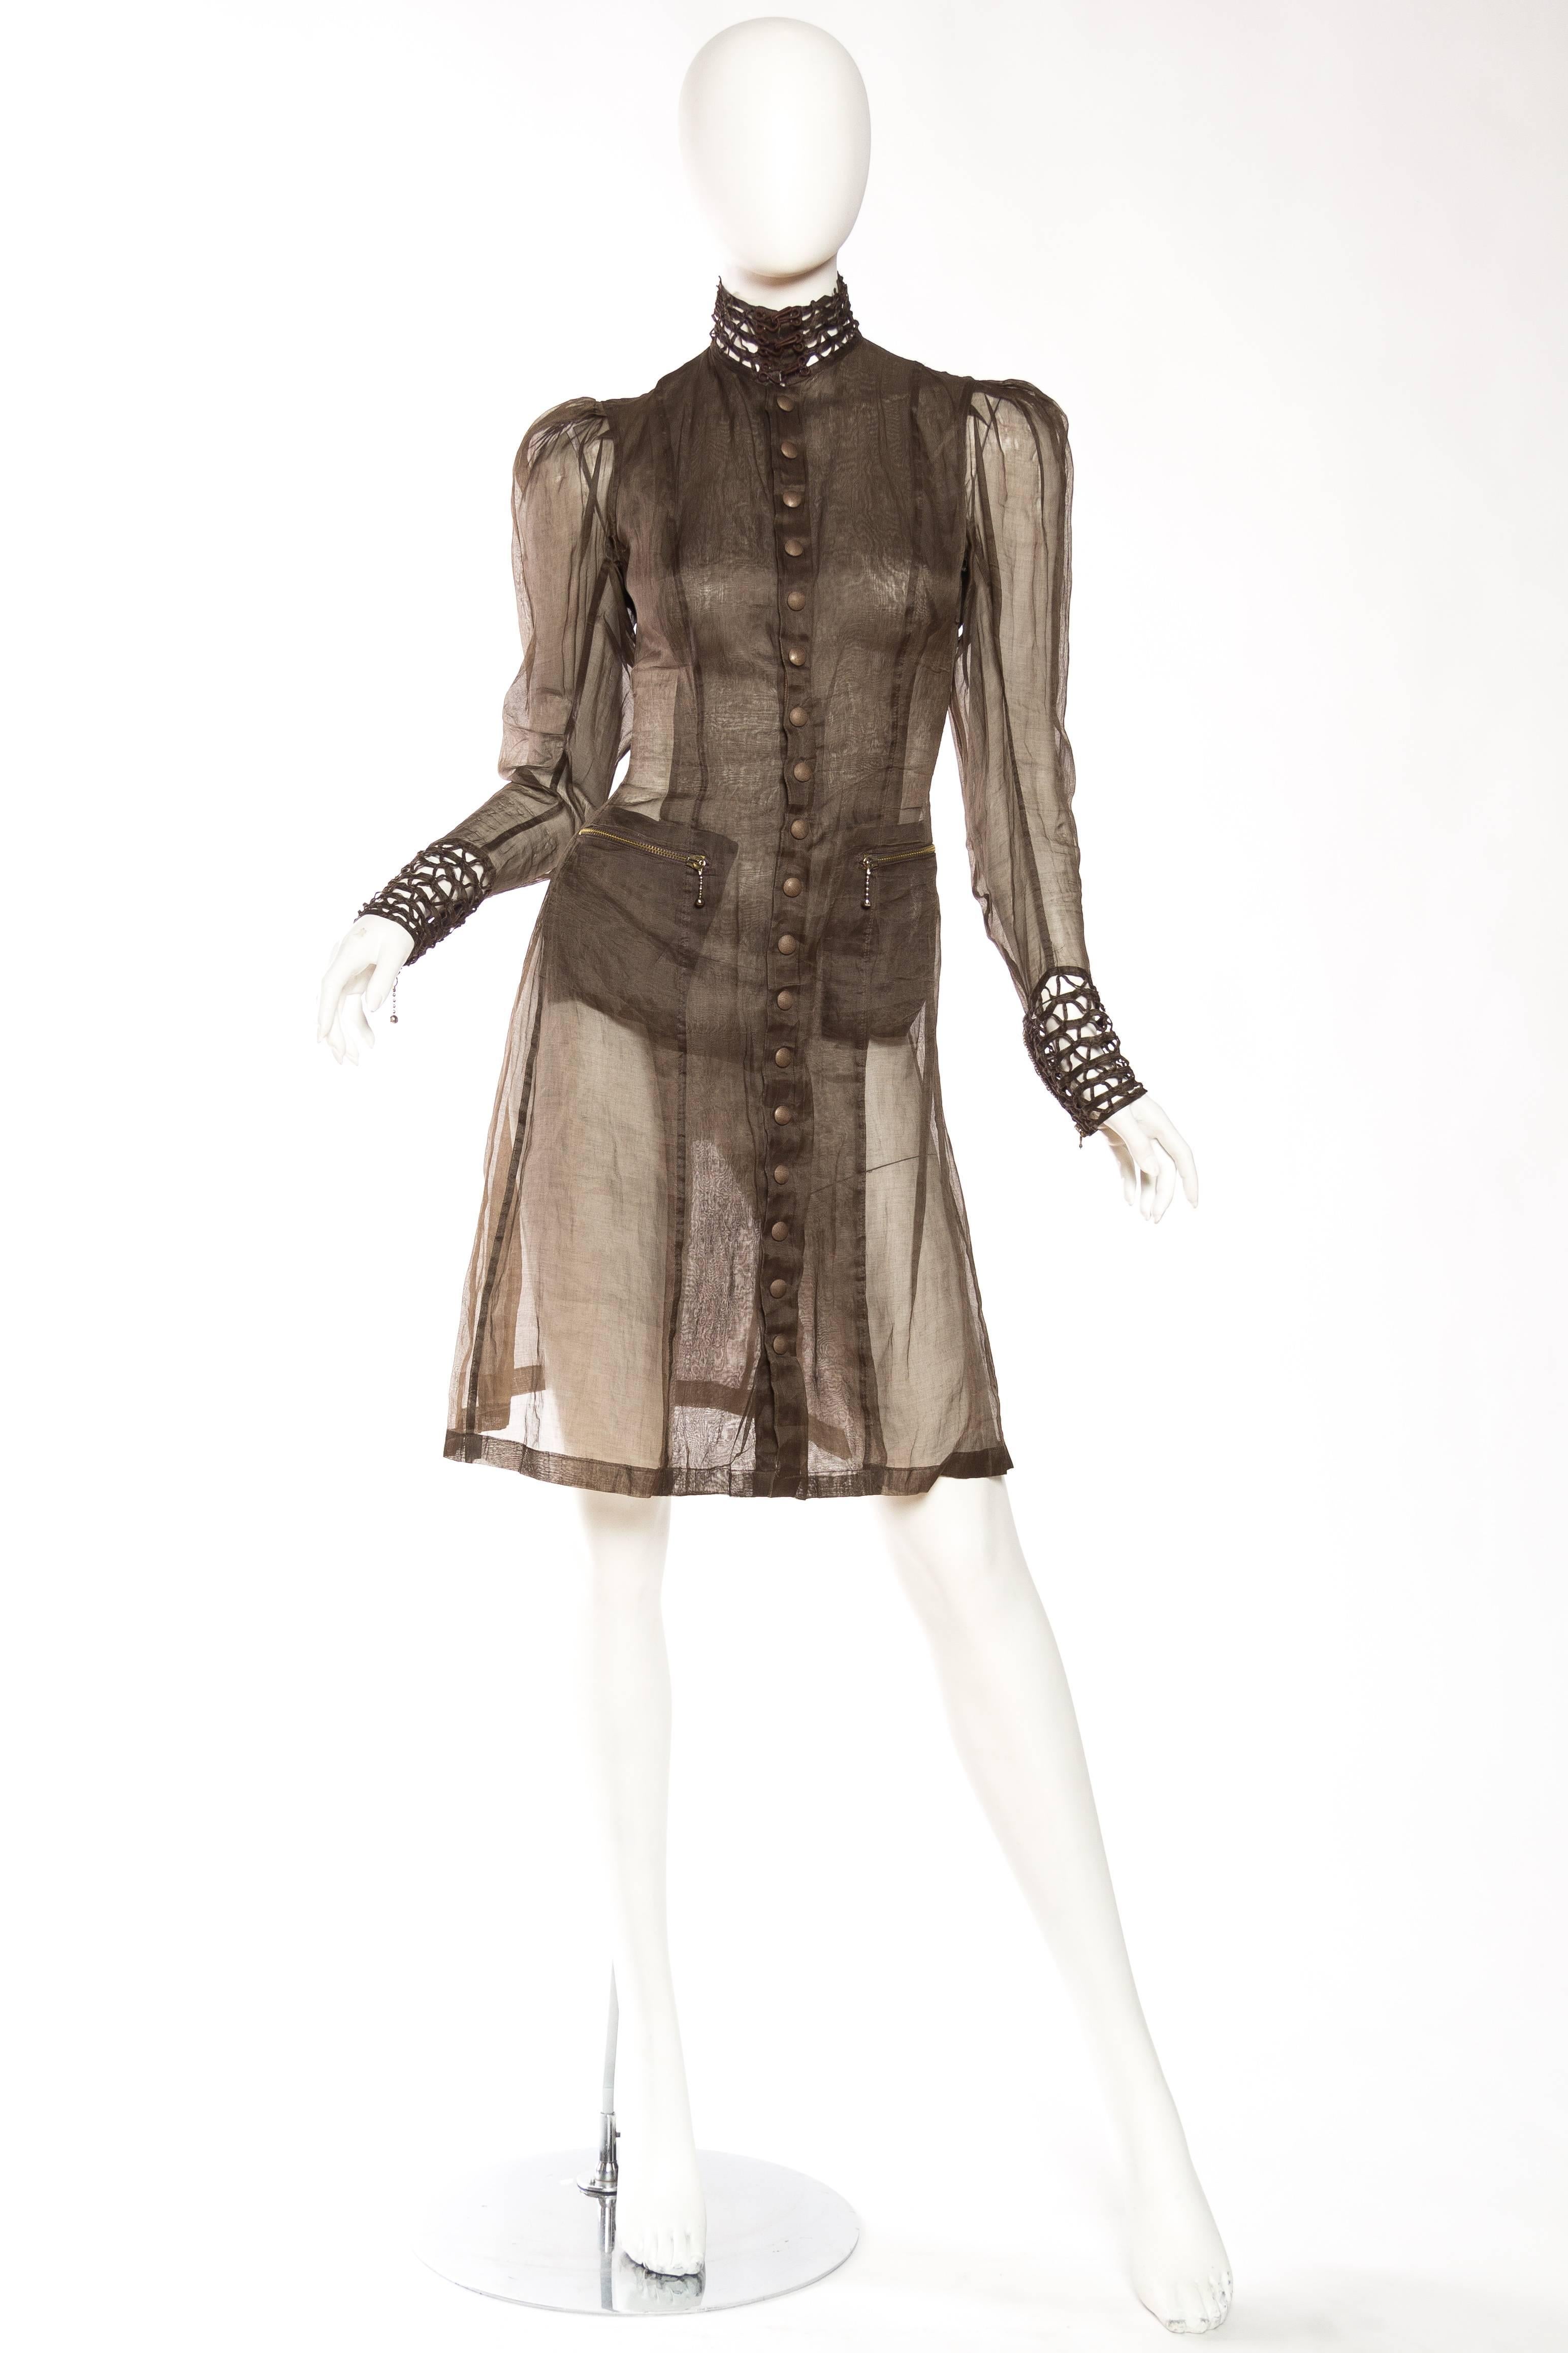 Gray Jean Paul Gaultier Victorian Style Sheer Organdy Dress